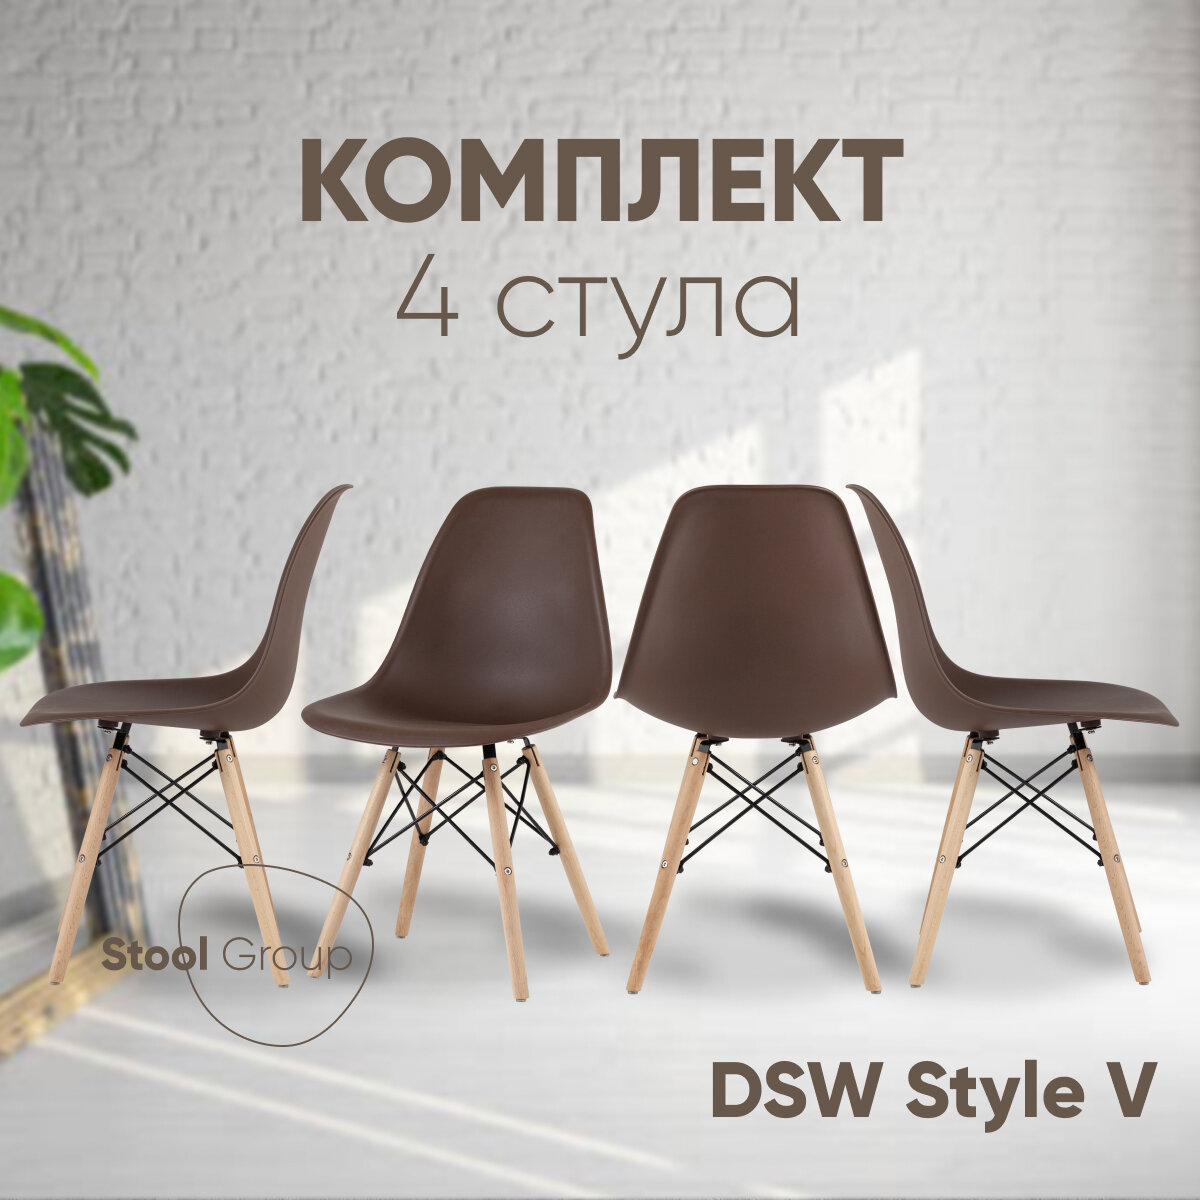 Стул для кухни DSW Style V, коричневый (комплект 4 стула)